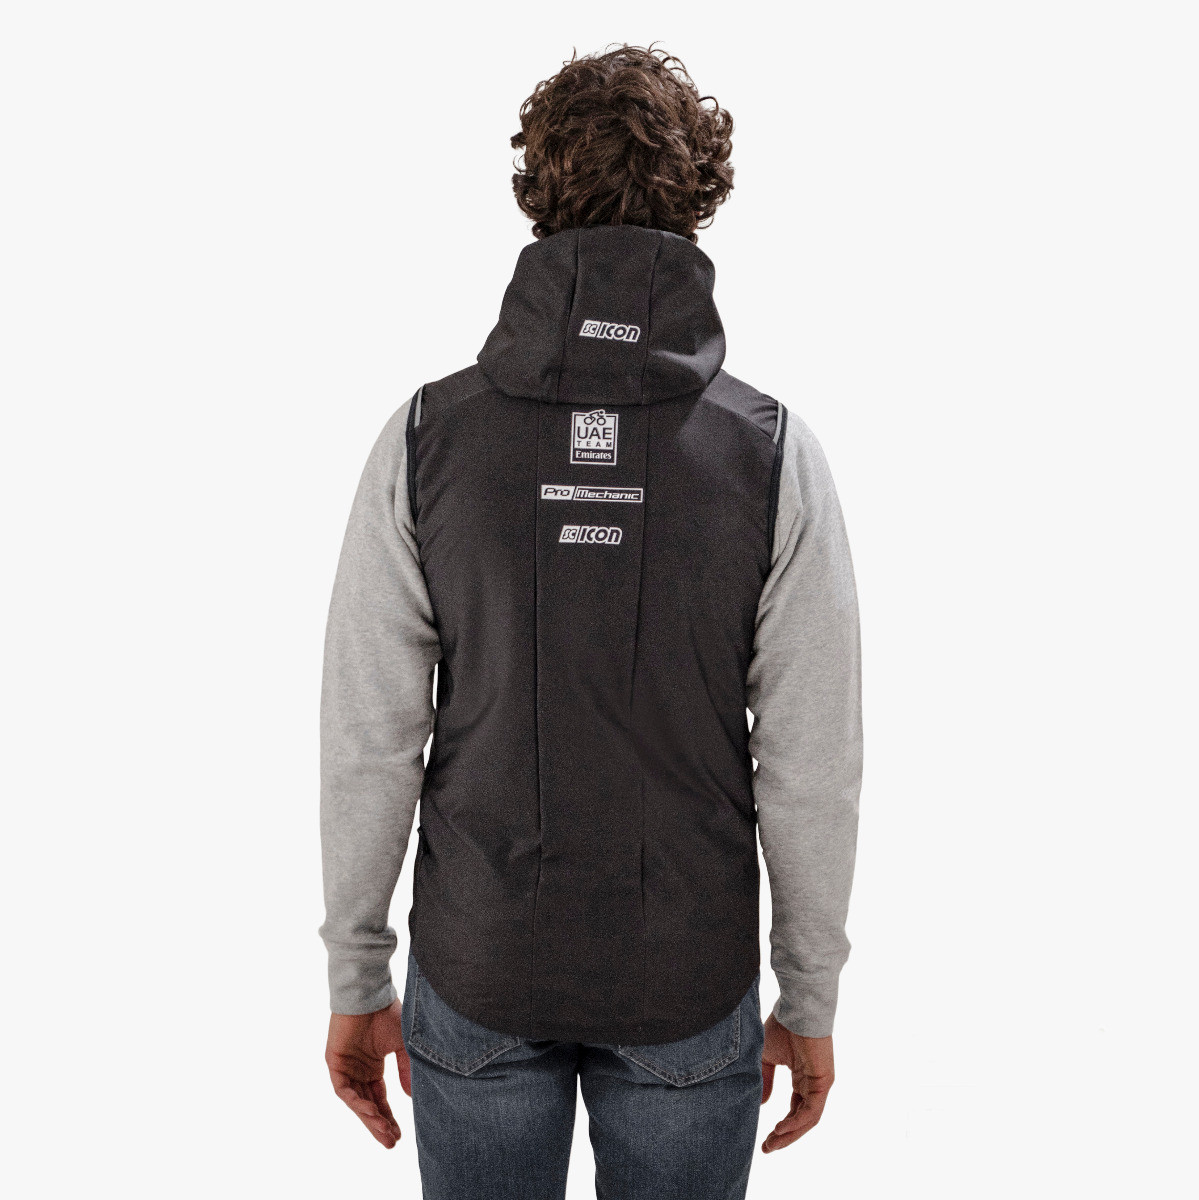 scicon hoodie thermal vest black htv11030